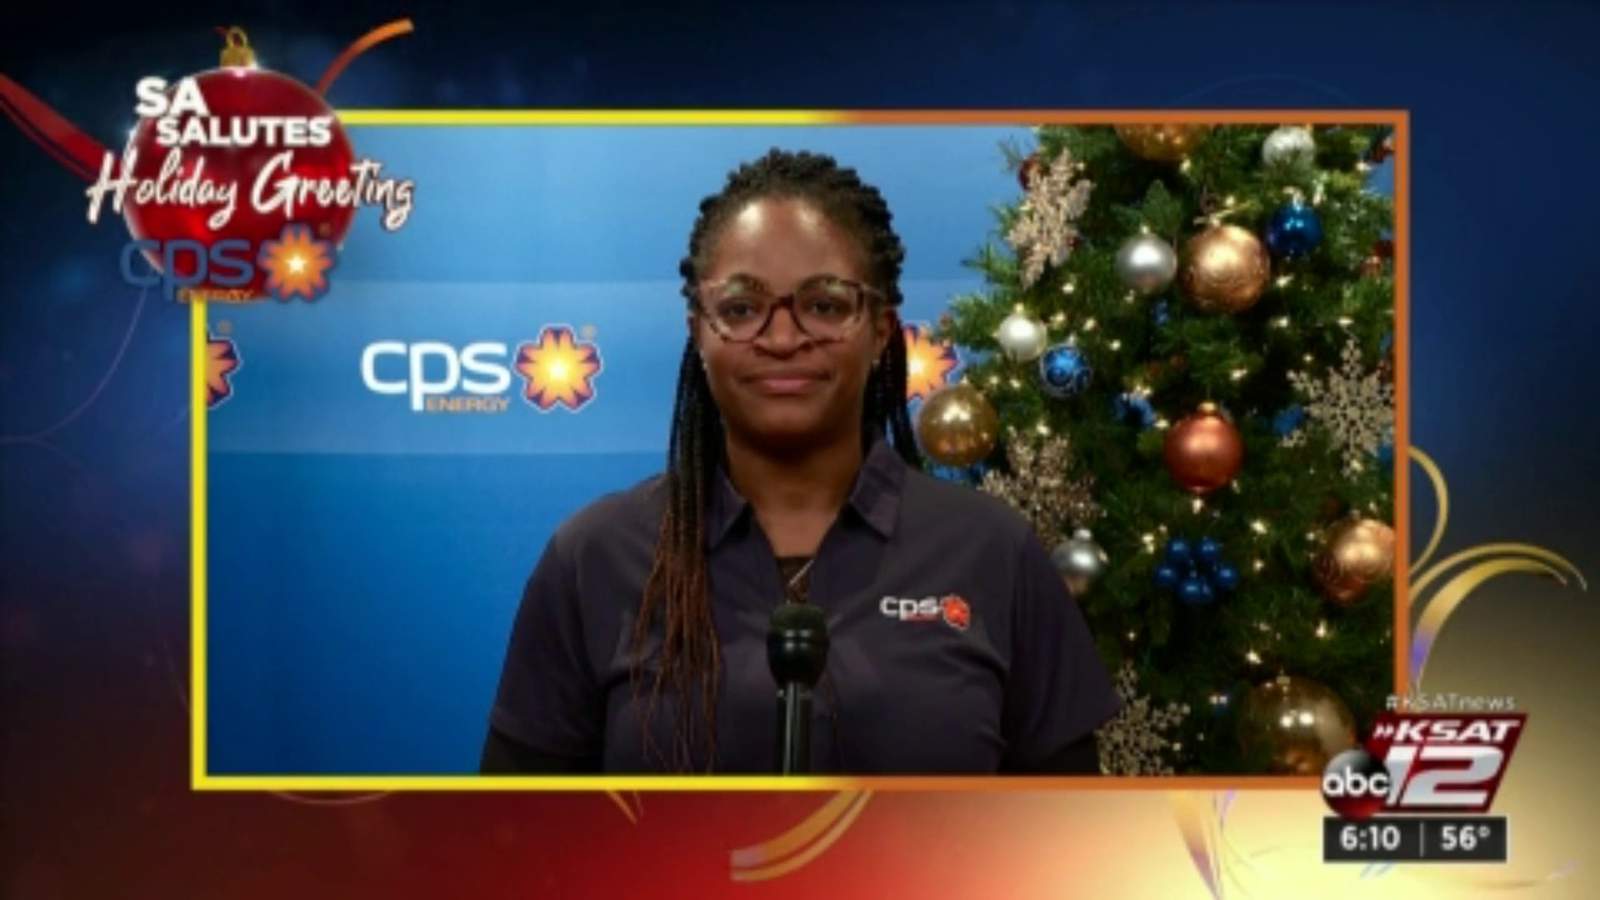 SA Salutes Holiday Greeting: Chiquita, CPS Energy